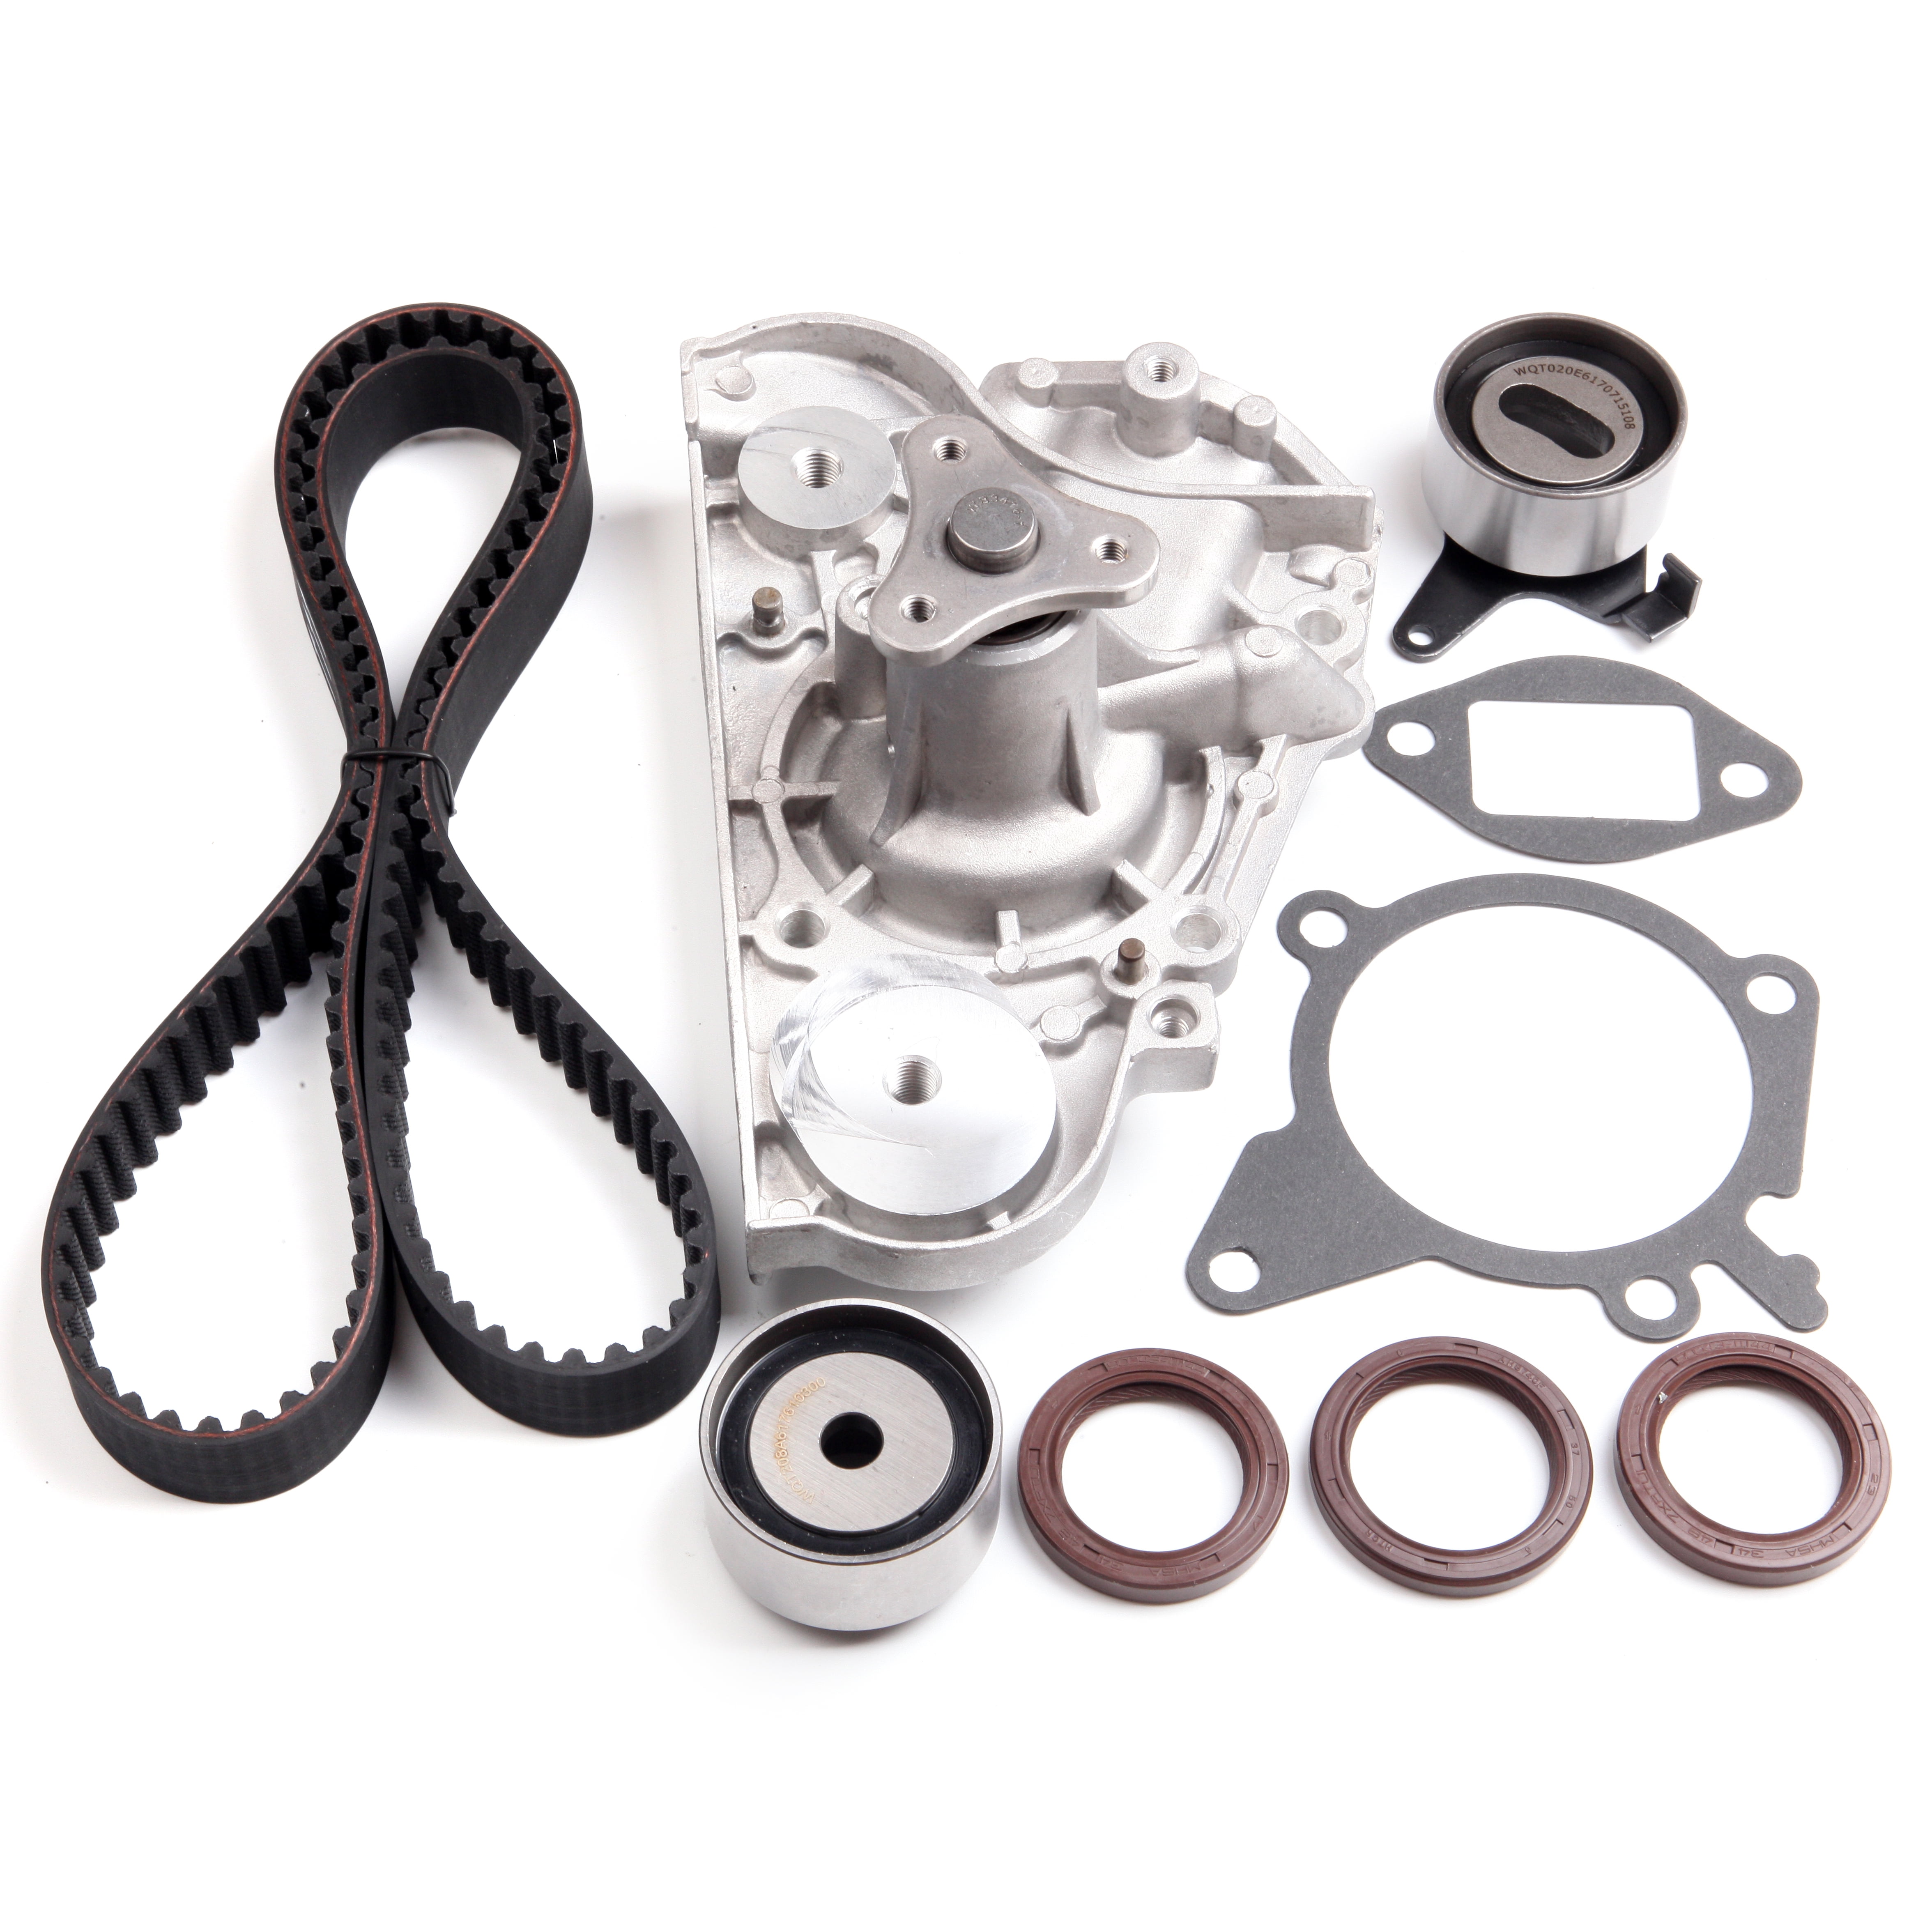 Timing Belt/Water Pump Kit for Ford Escort Mercury Capri Tracer Mazda Protege 